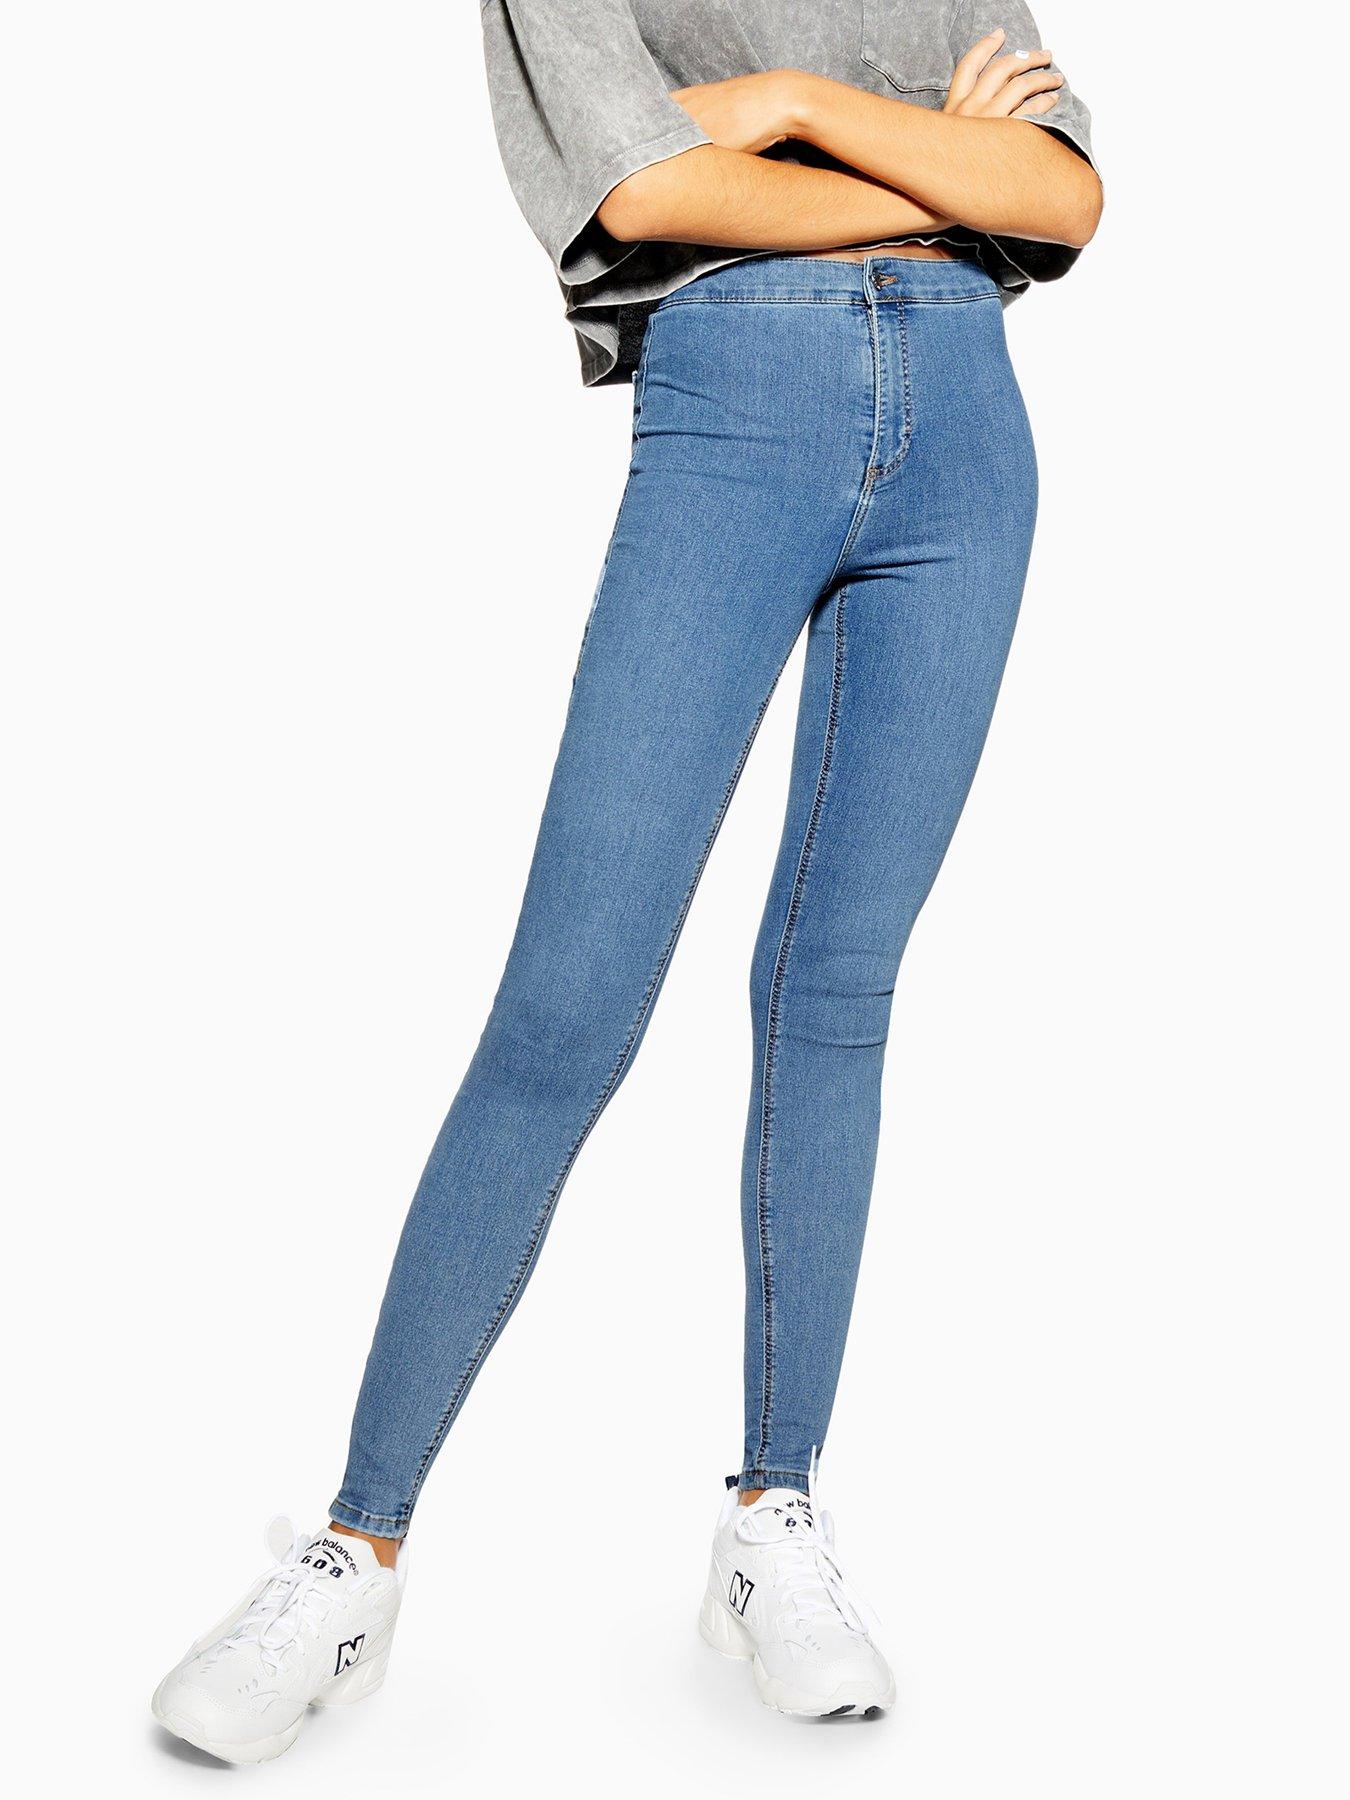 topshop joni jeans australia